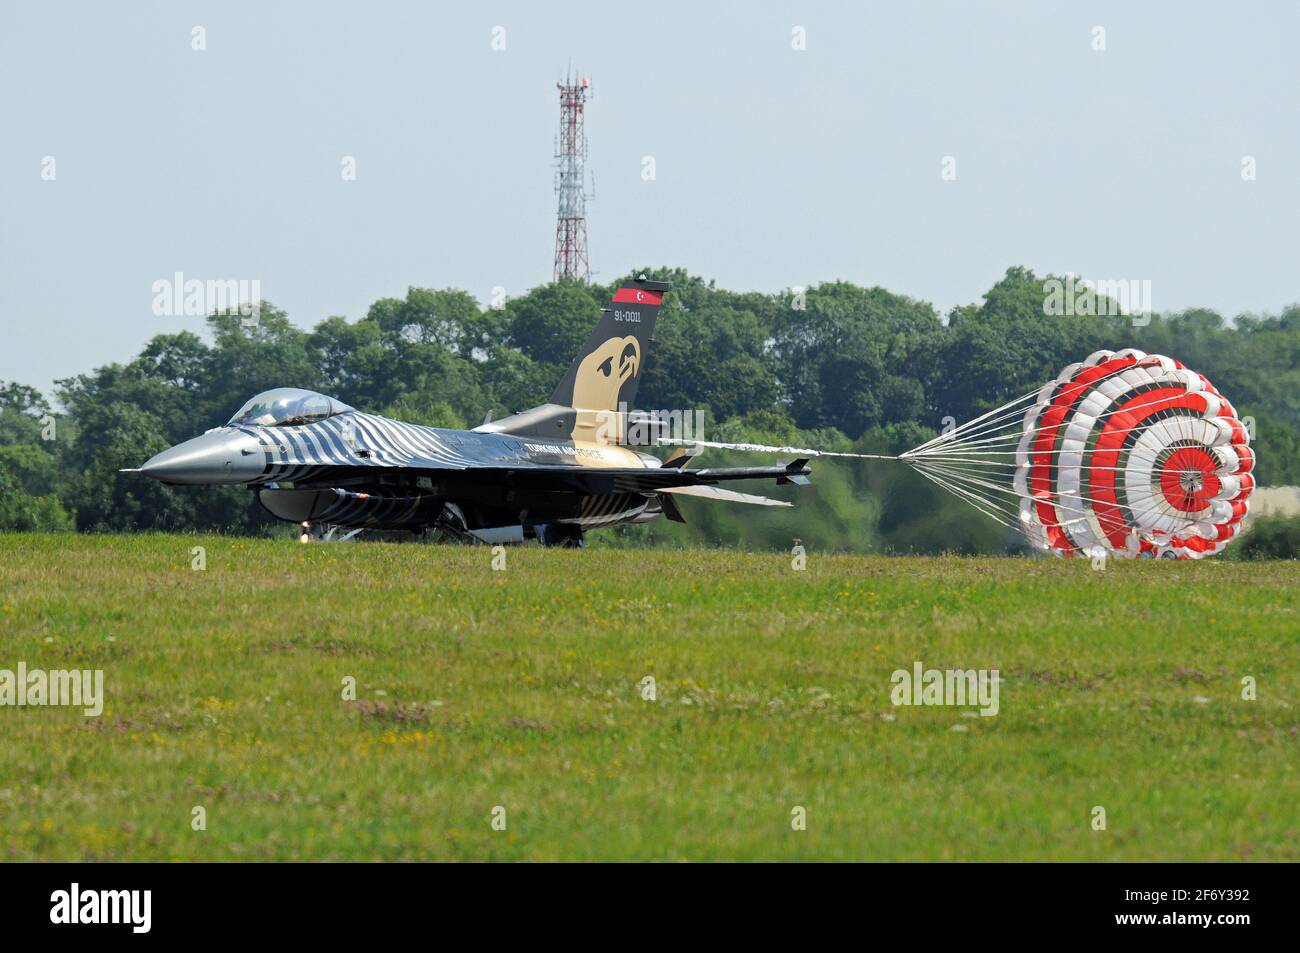 Air Force turca F-16 "Falcon". Foto Stock